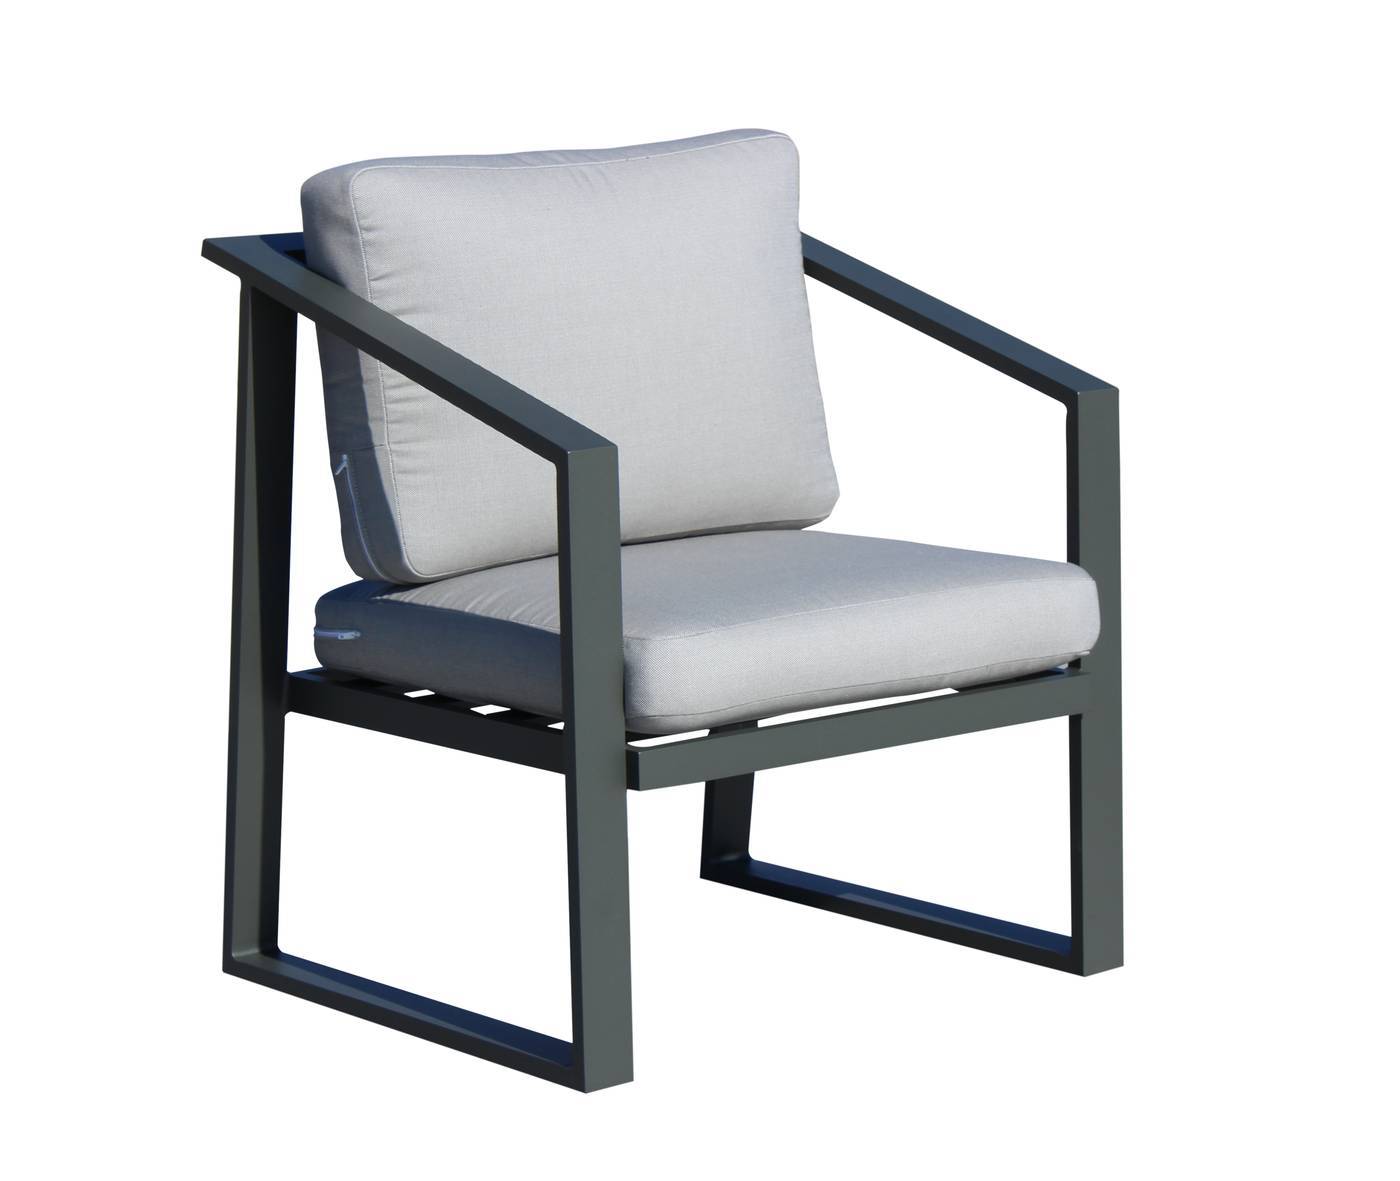 Set Aluminio Sadem-9 - Conjunto aluminio para exterior: sofá 2 plazas + 2 sillones + mesa de centro + 2 taburetes. Fabricado de aluminio en color blanco, antracita, champagne, plata o marrón.